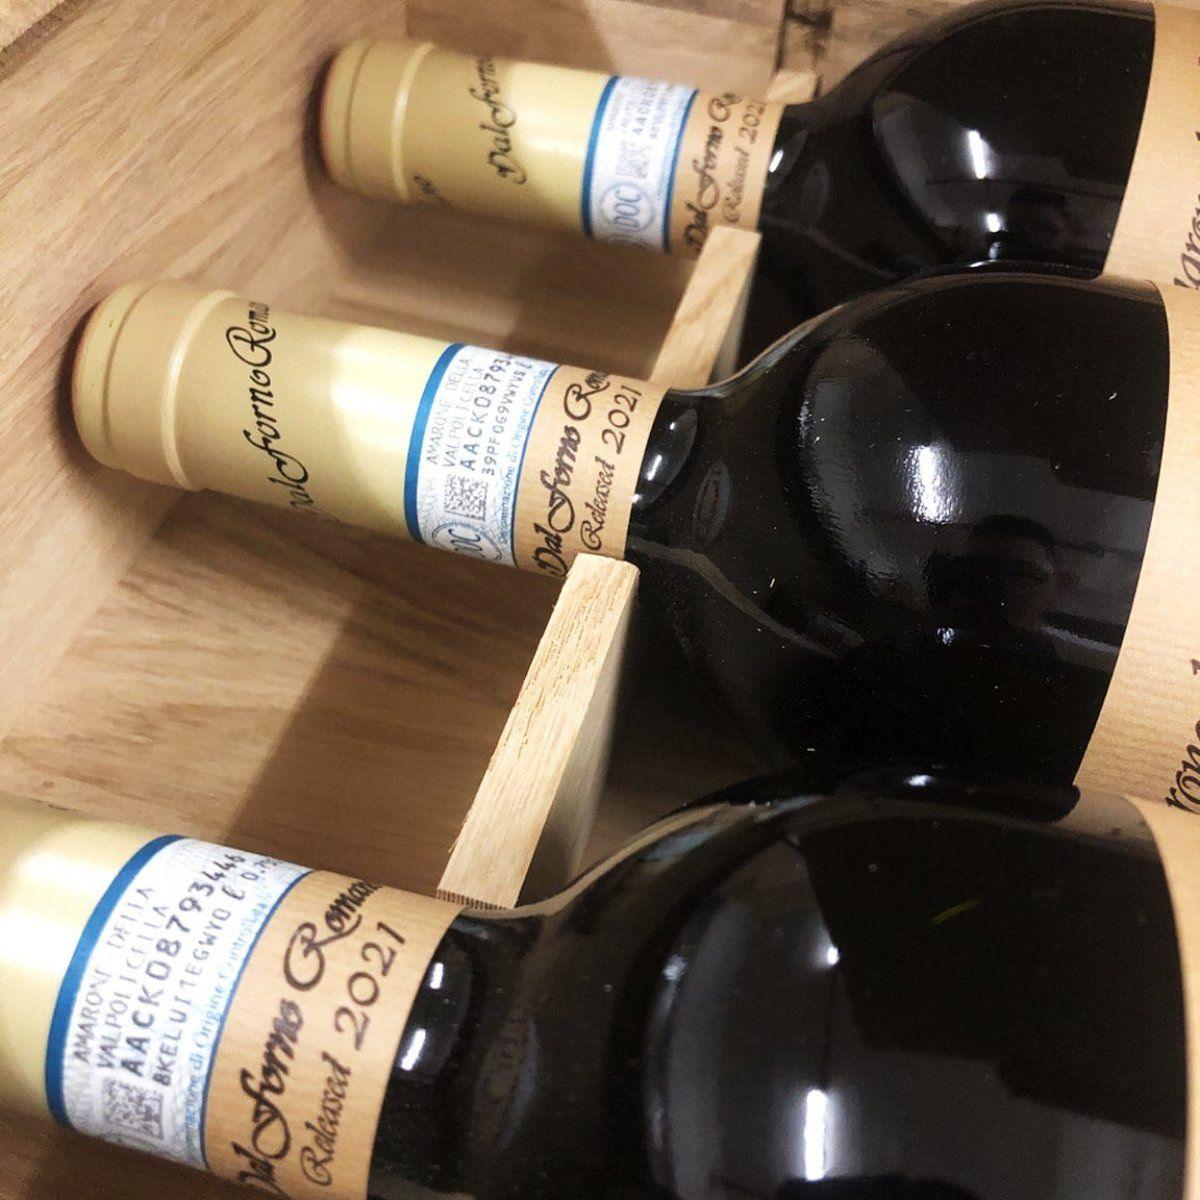 Dal Forno Romano Historical Release, Amarone 2008, Amarone 2009, Wine-set of 3 bottles of 750ml Italian red wine, made from Corvina, Rondinella, Croatina and Oseleta, from Amarone della Valpolicella, Veneto, Italy – GDV Fine Wines, Hong Kong